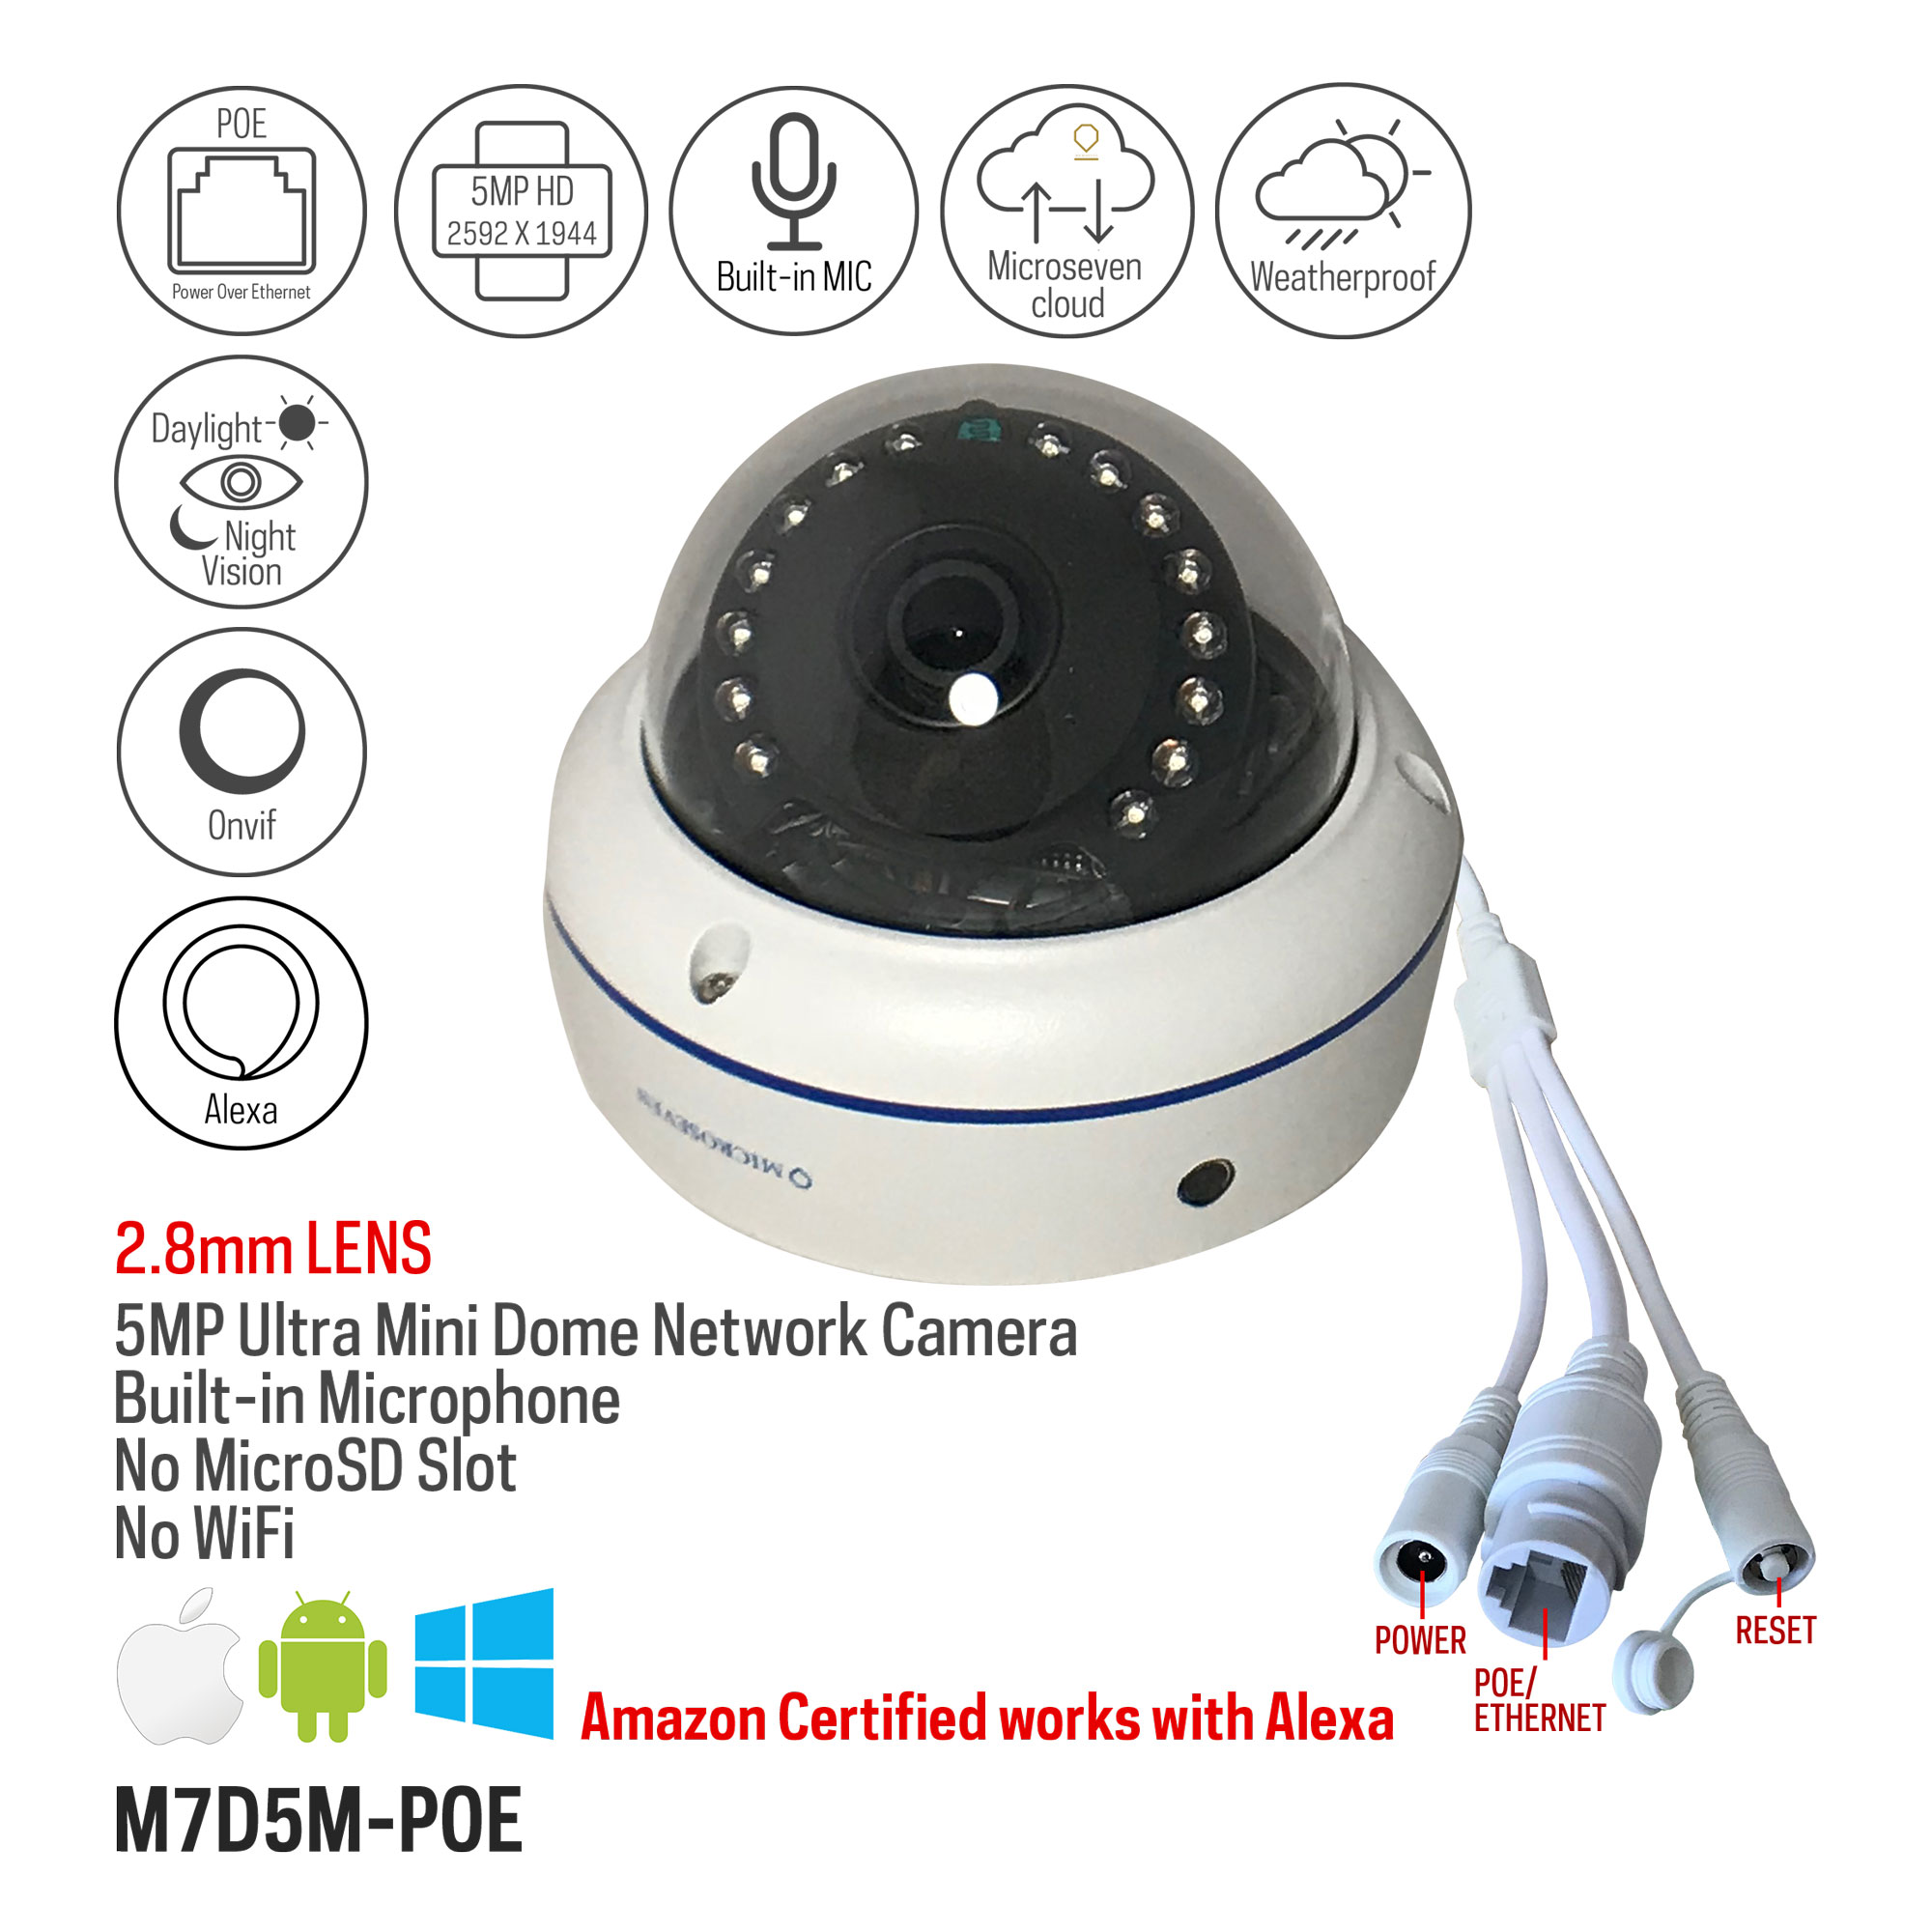 microseven camera setup wireless